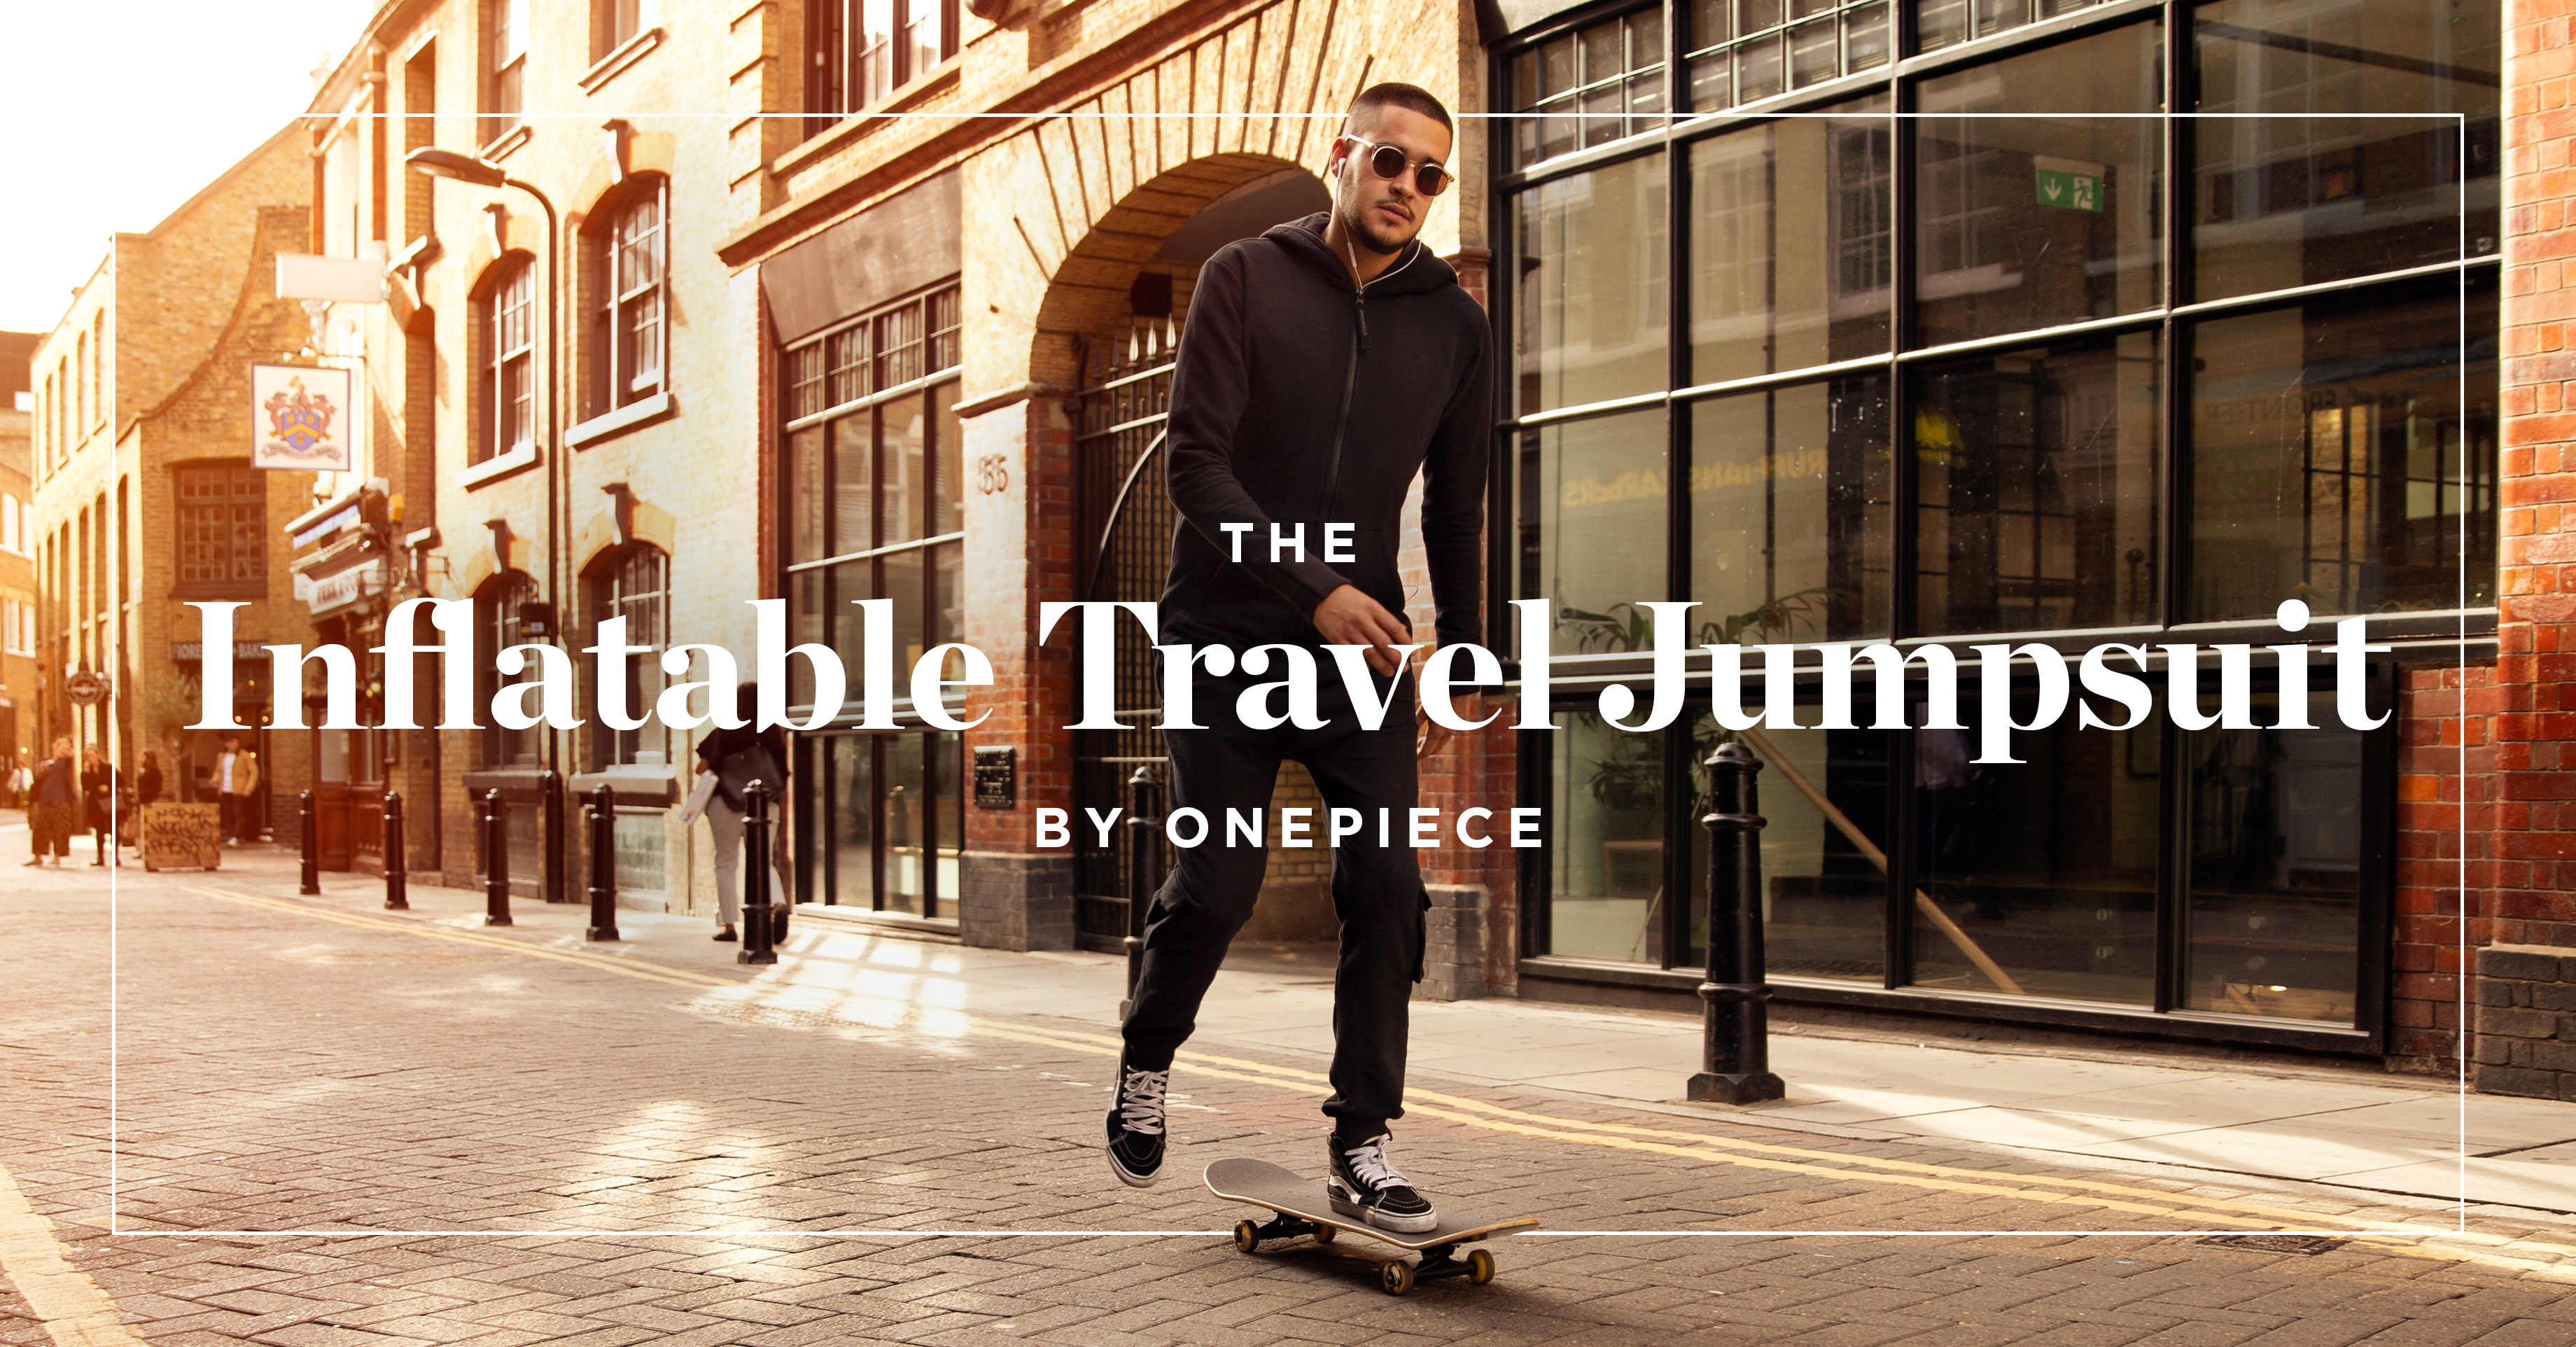 travel jumpsuit kickstarter